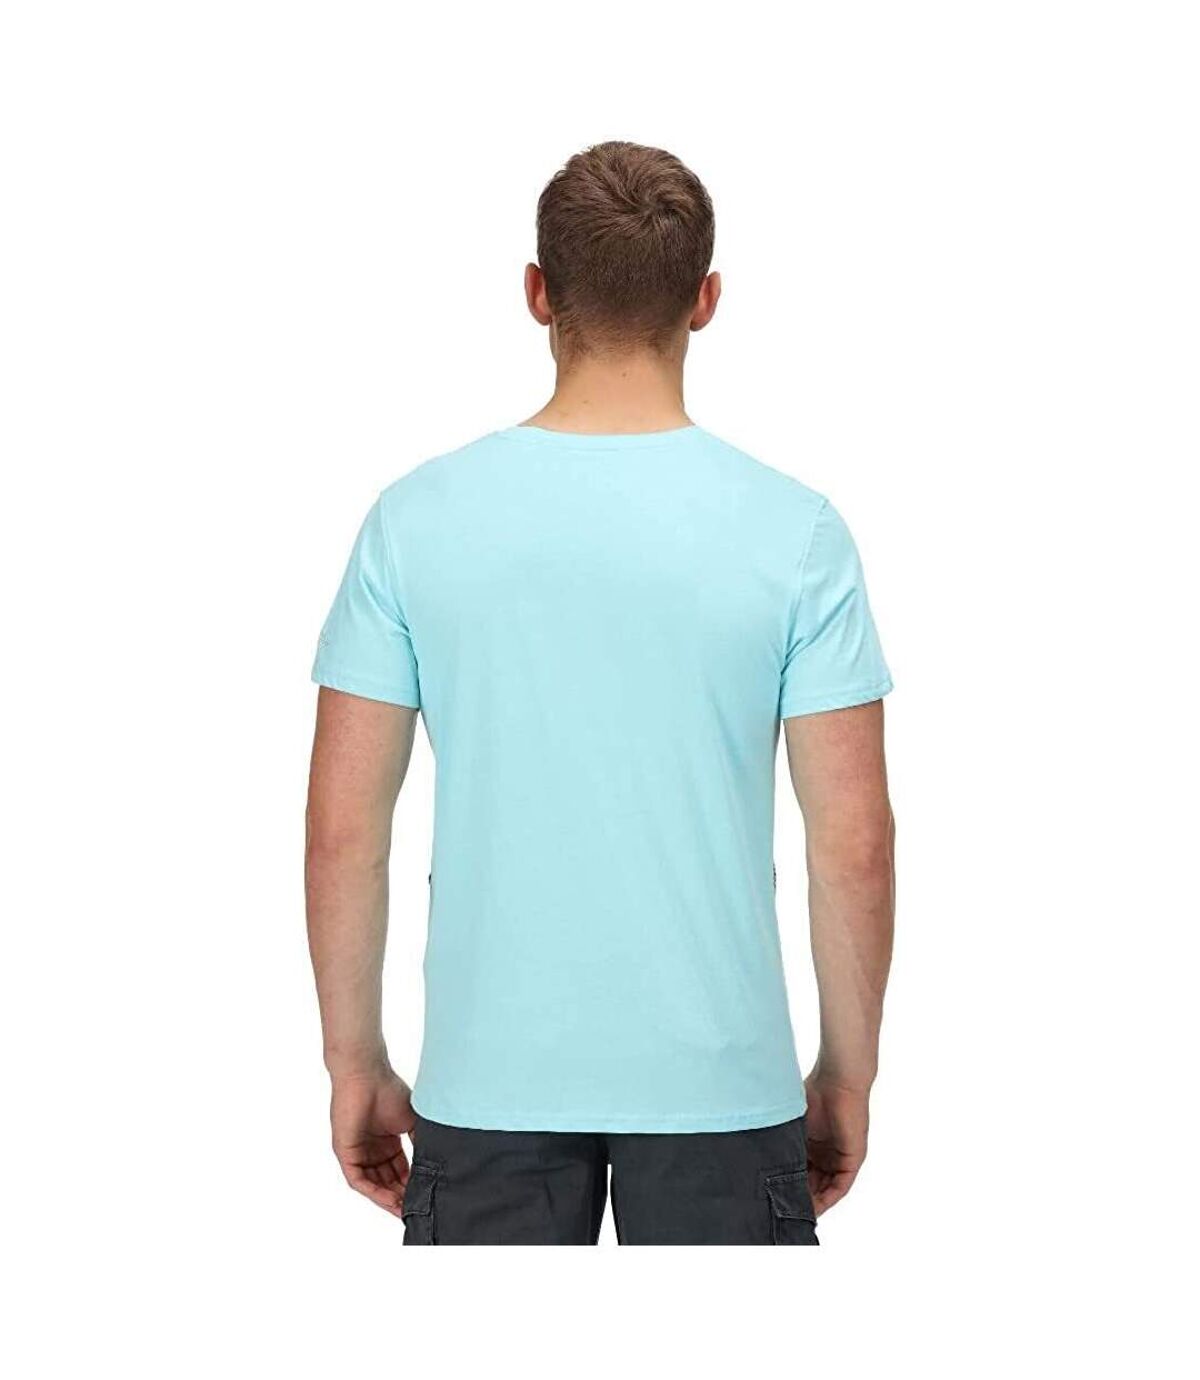 Regatta Mens Cline VI Leaves Cotton T-Shirt (Antigua Blue) - UTRG6665